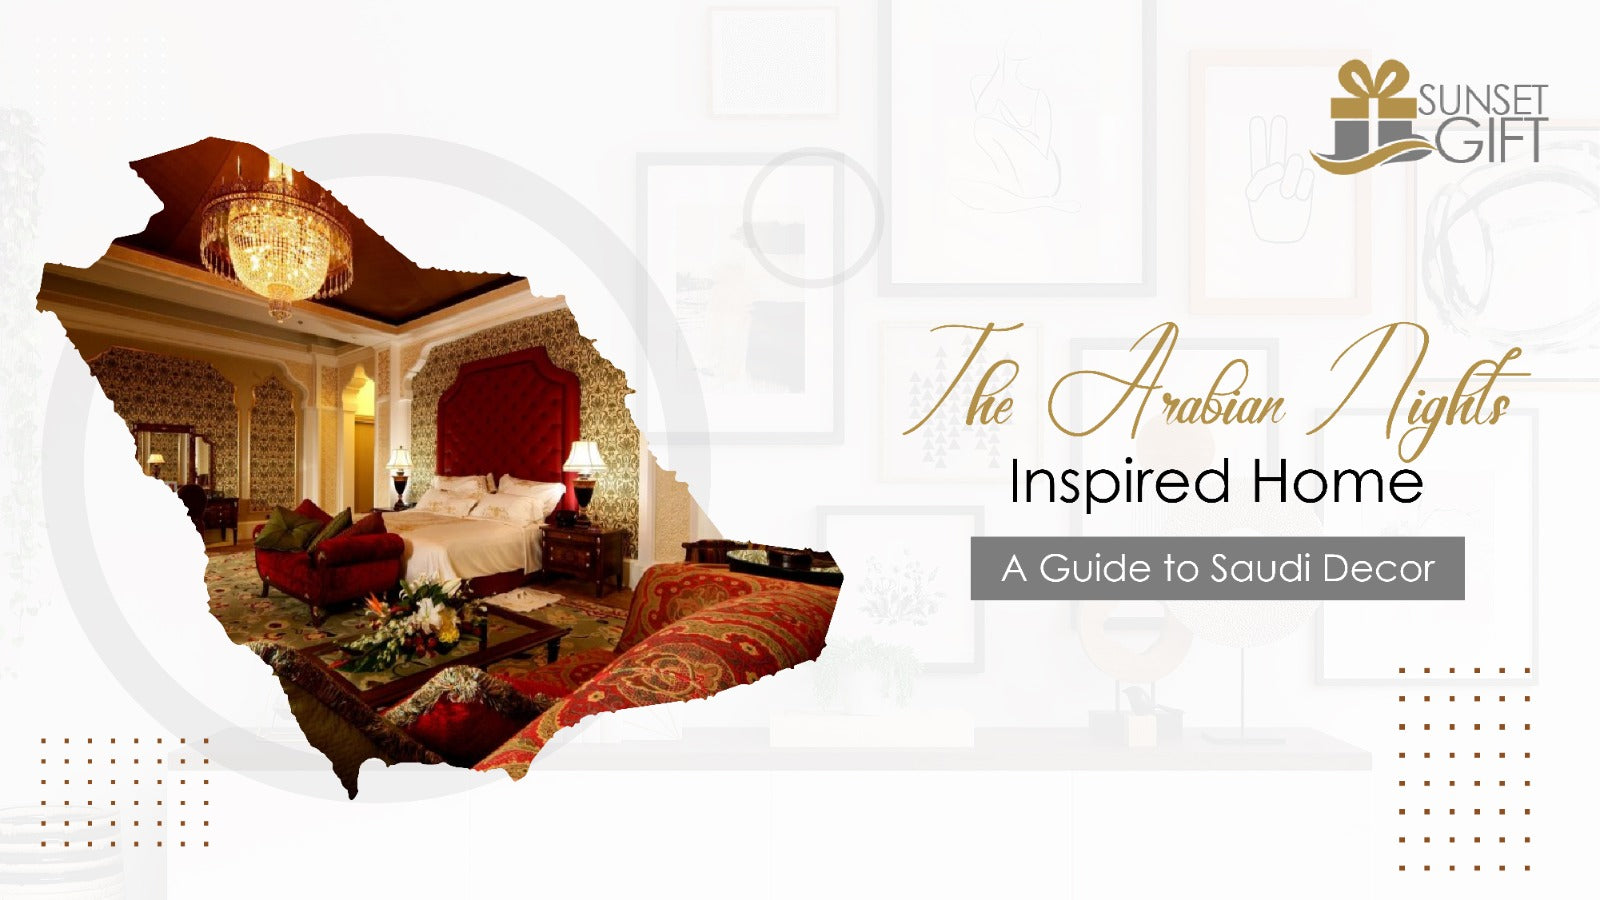 The Arabian Nights-Inspired Home: A Guide to Saudi Decor